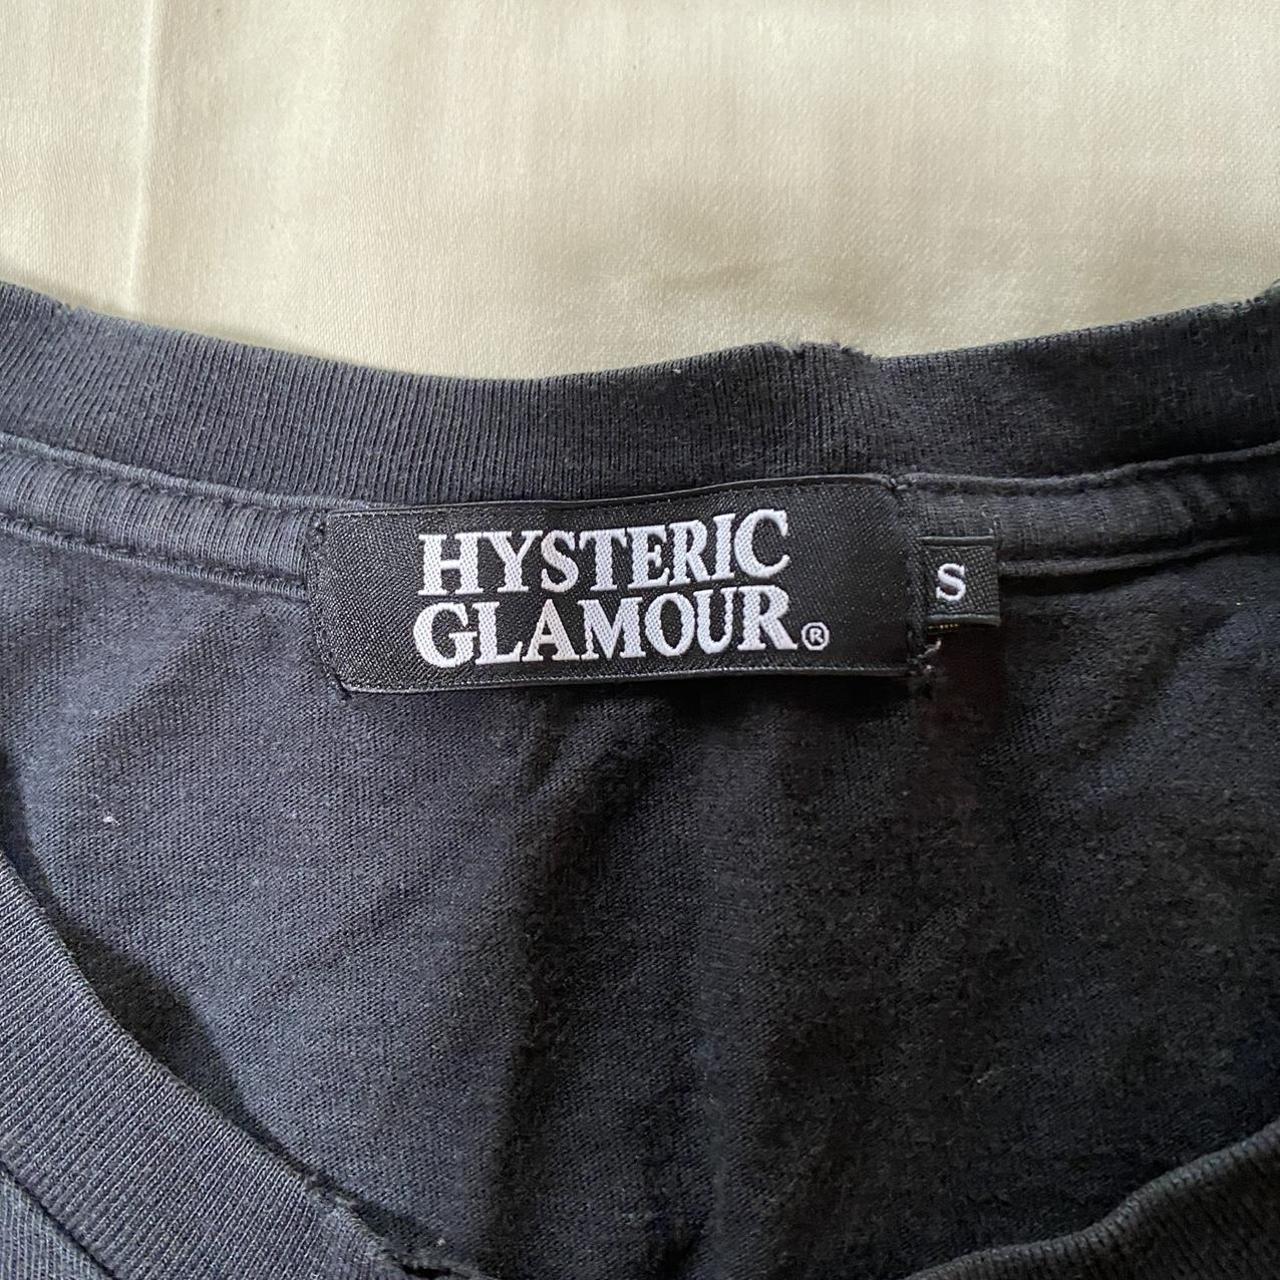 Hysteric Glamour Men's Black T-shirt (4)